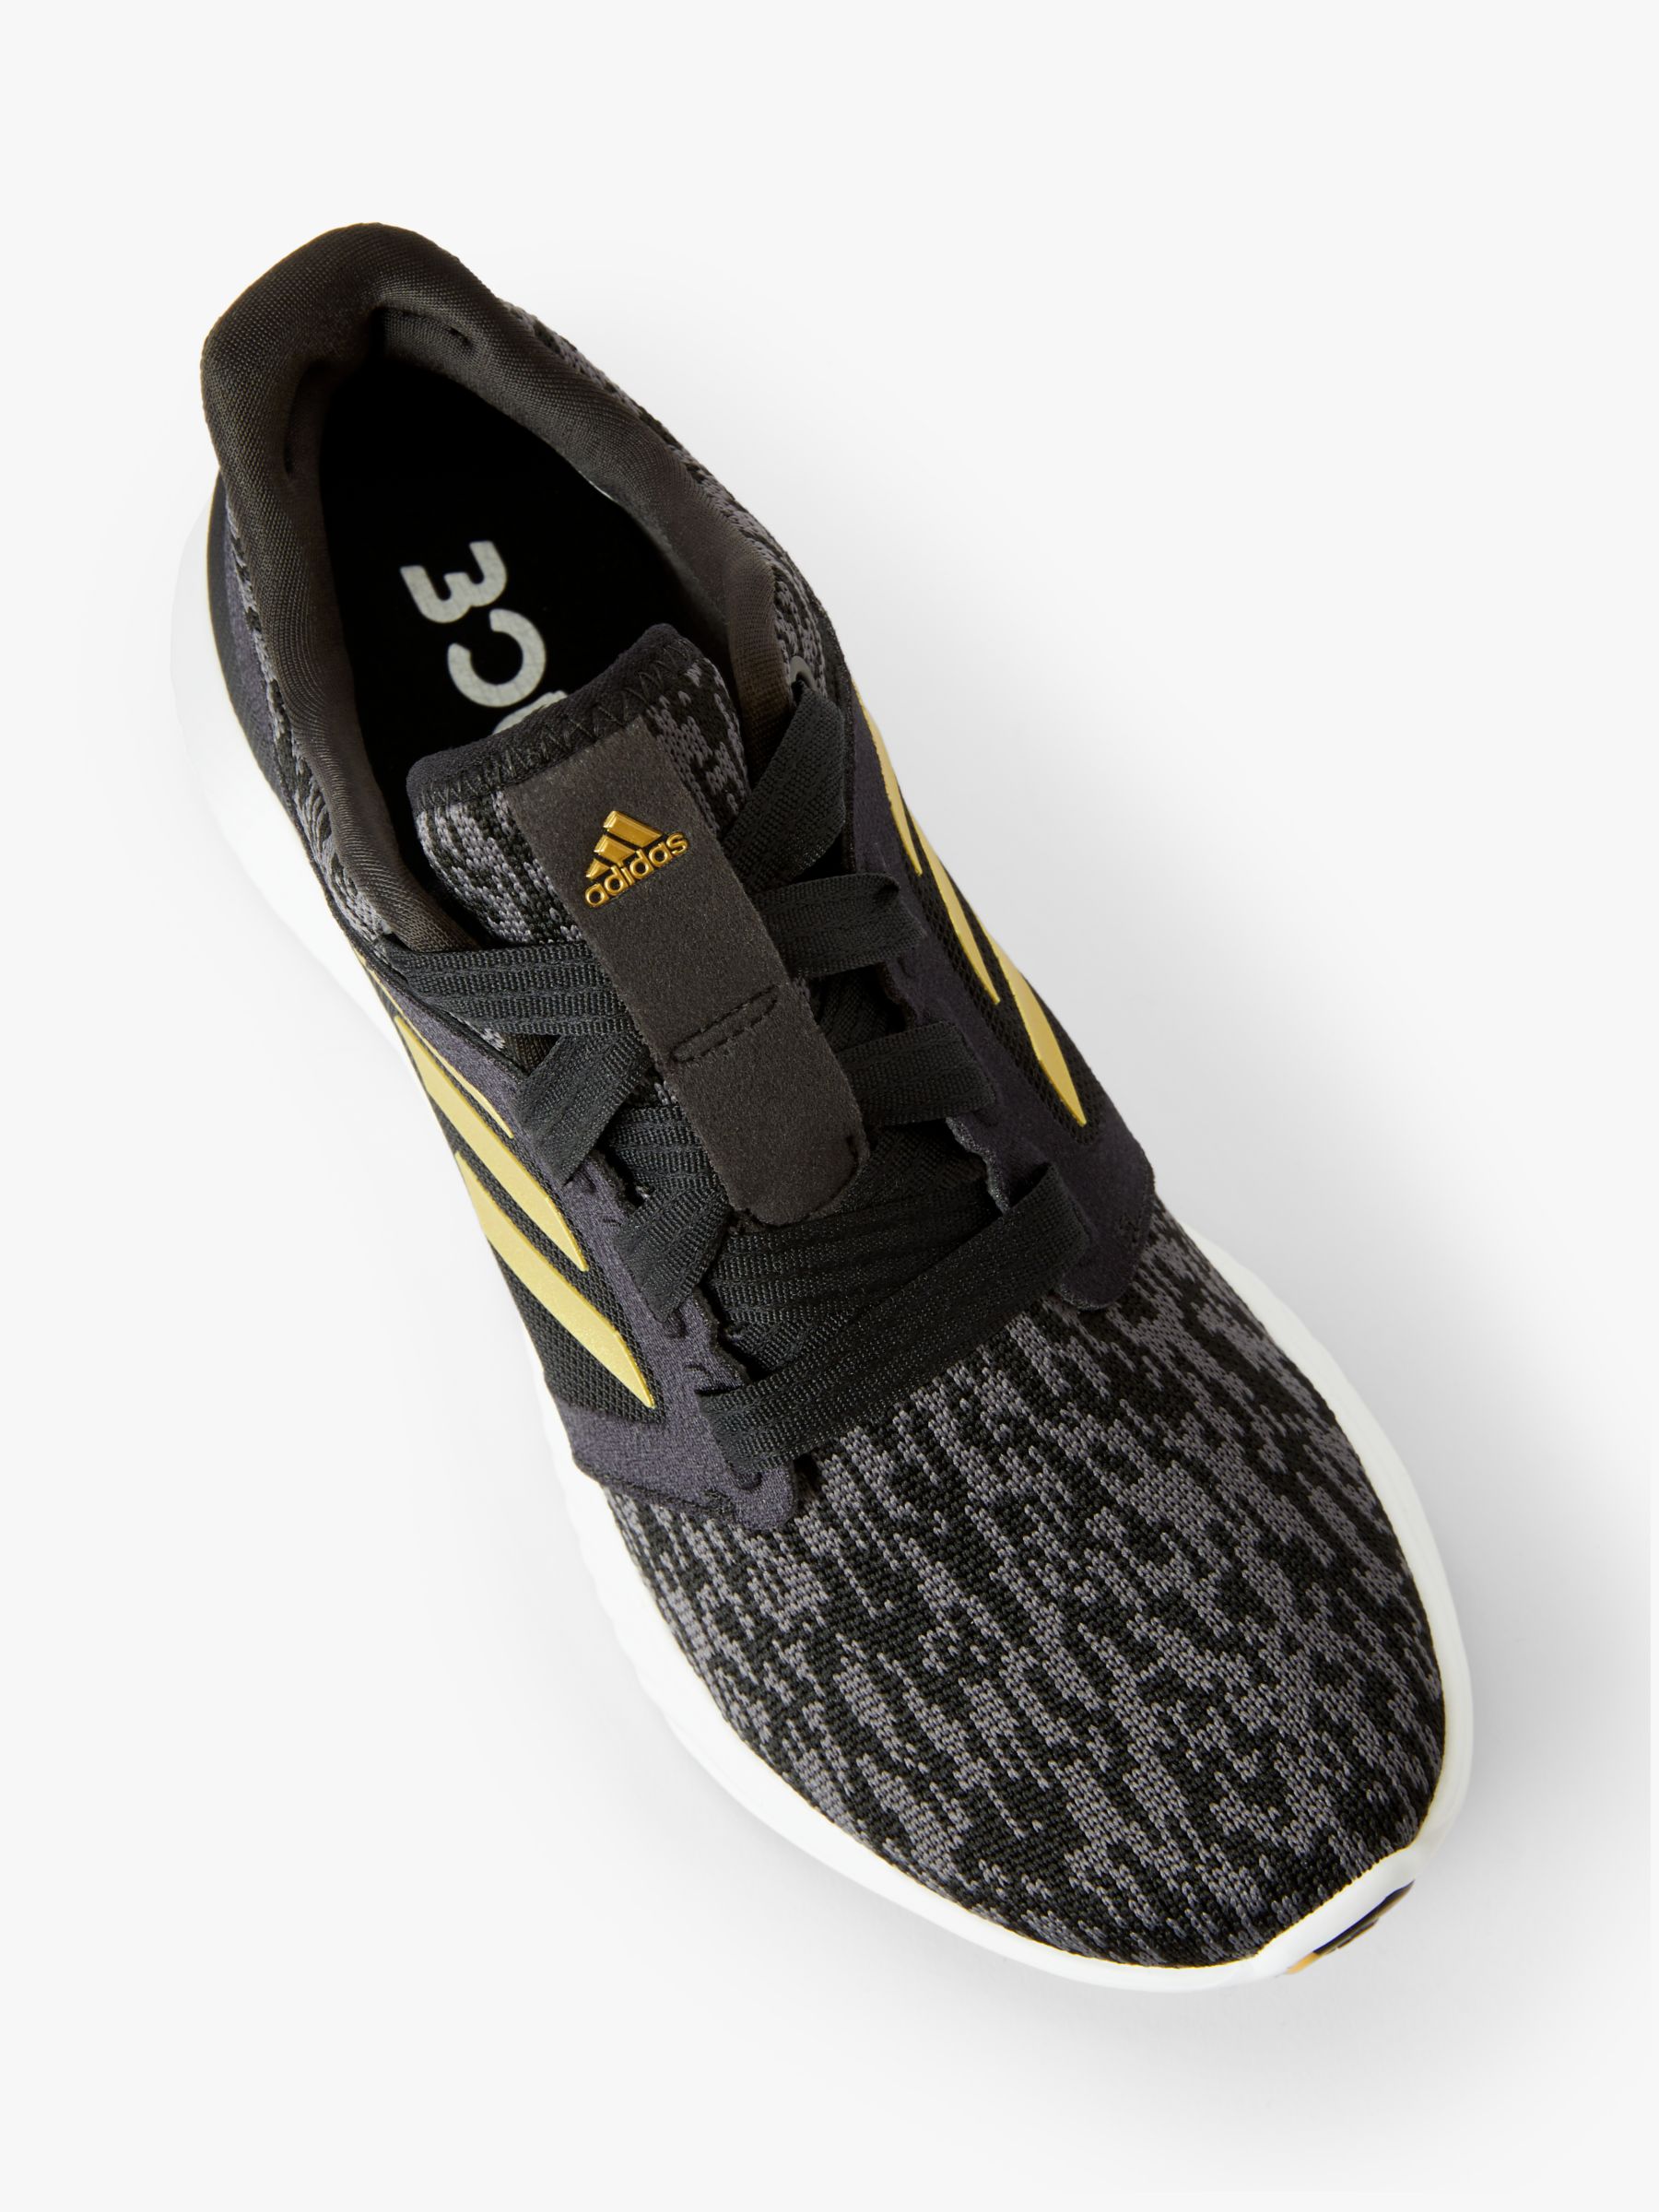 adidas edge lux black gold